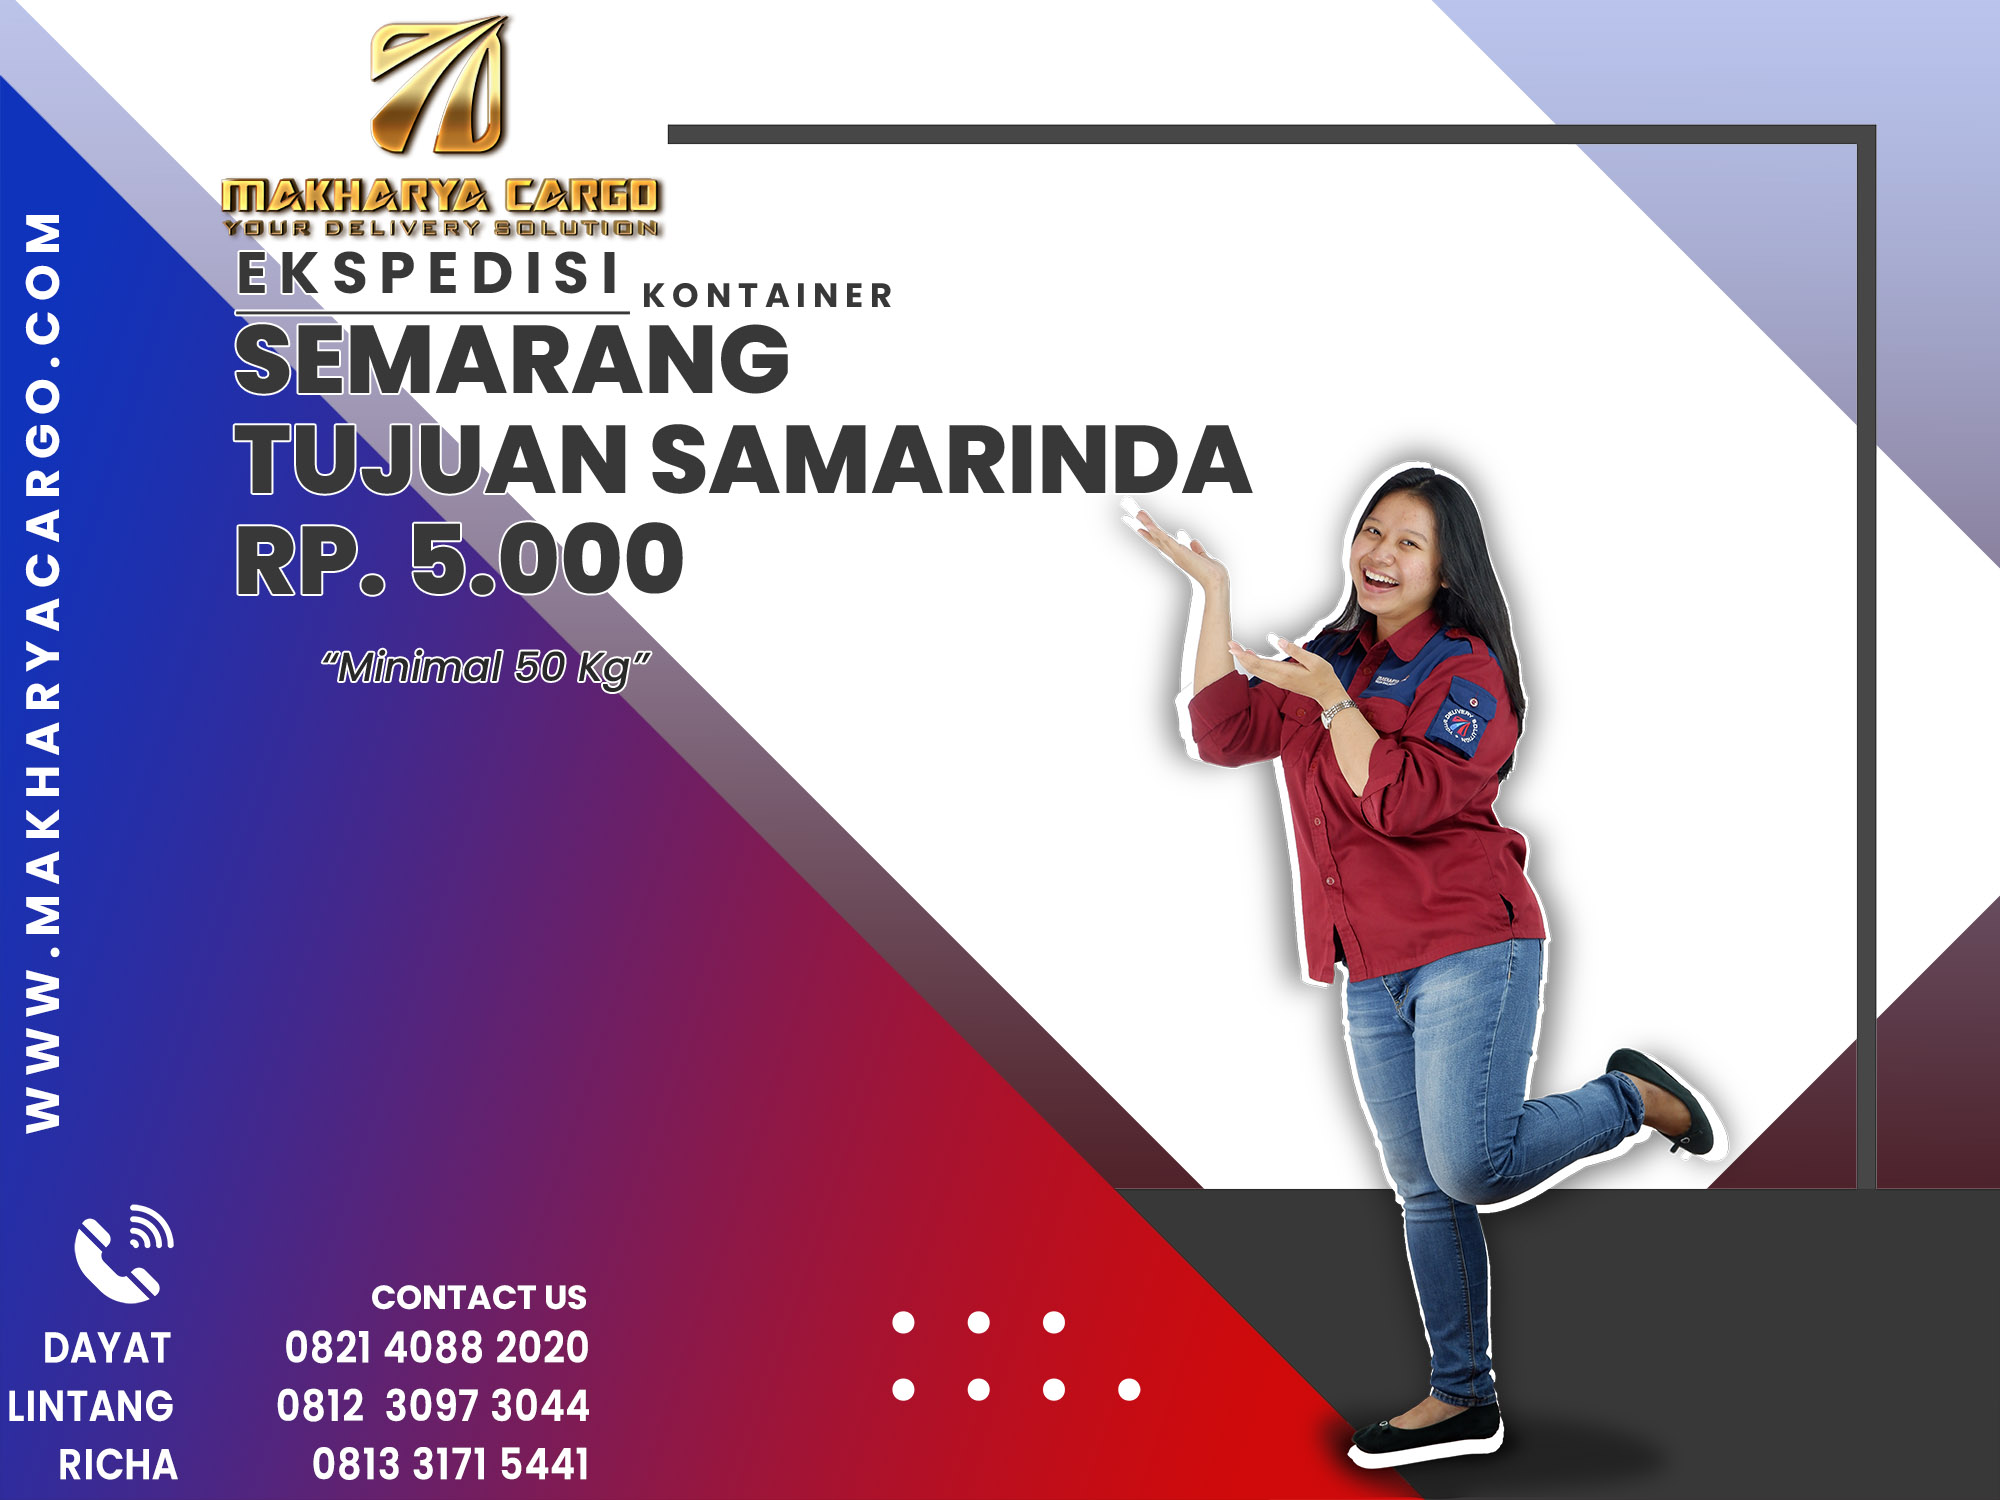 Ekspedisi Kontainer Semarang Samarinda